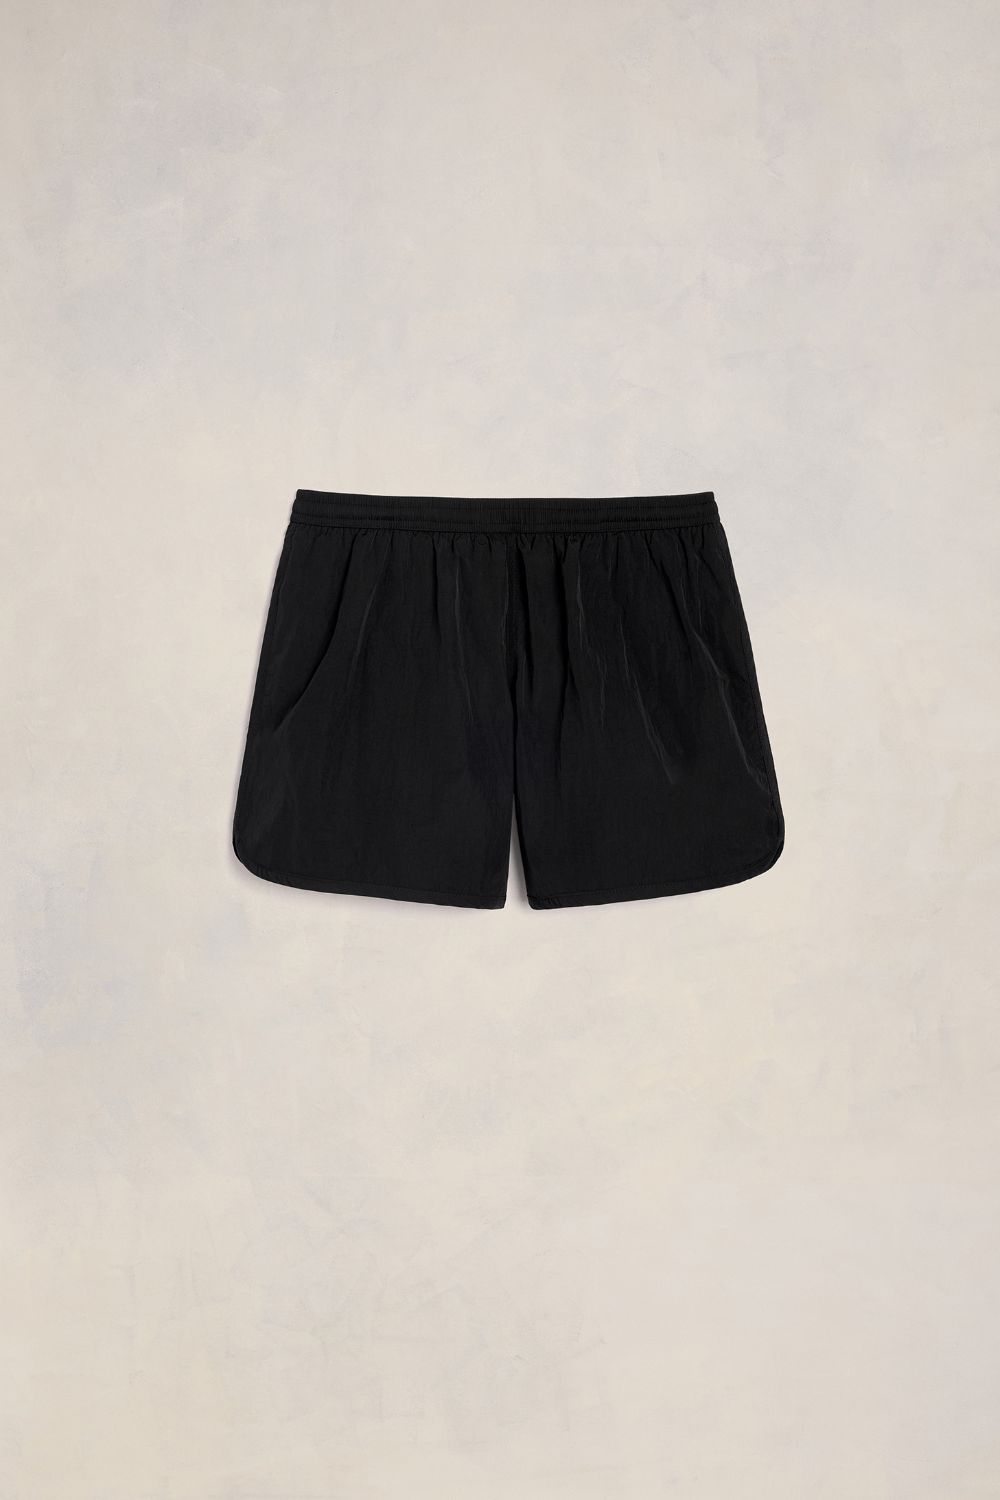 Shop Ami Alexandre Mattiussi Swim Shorts Black For Men